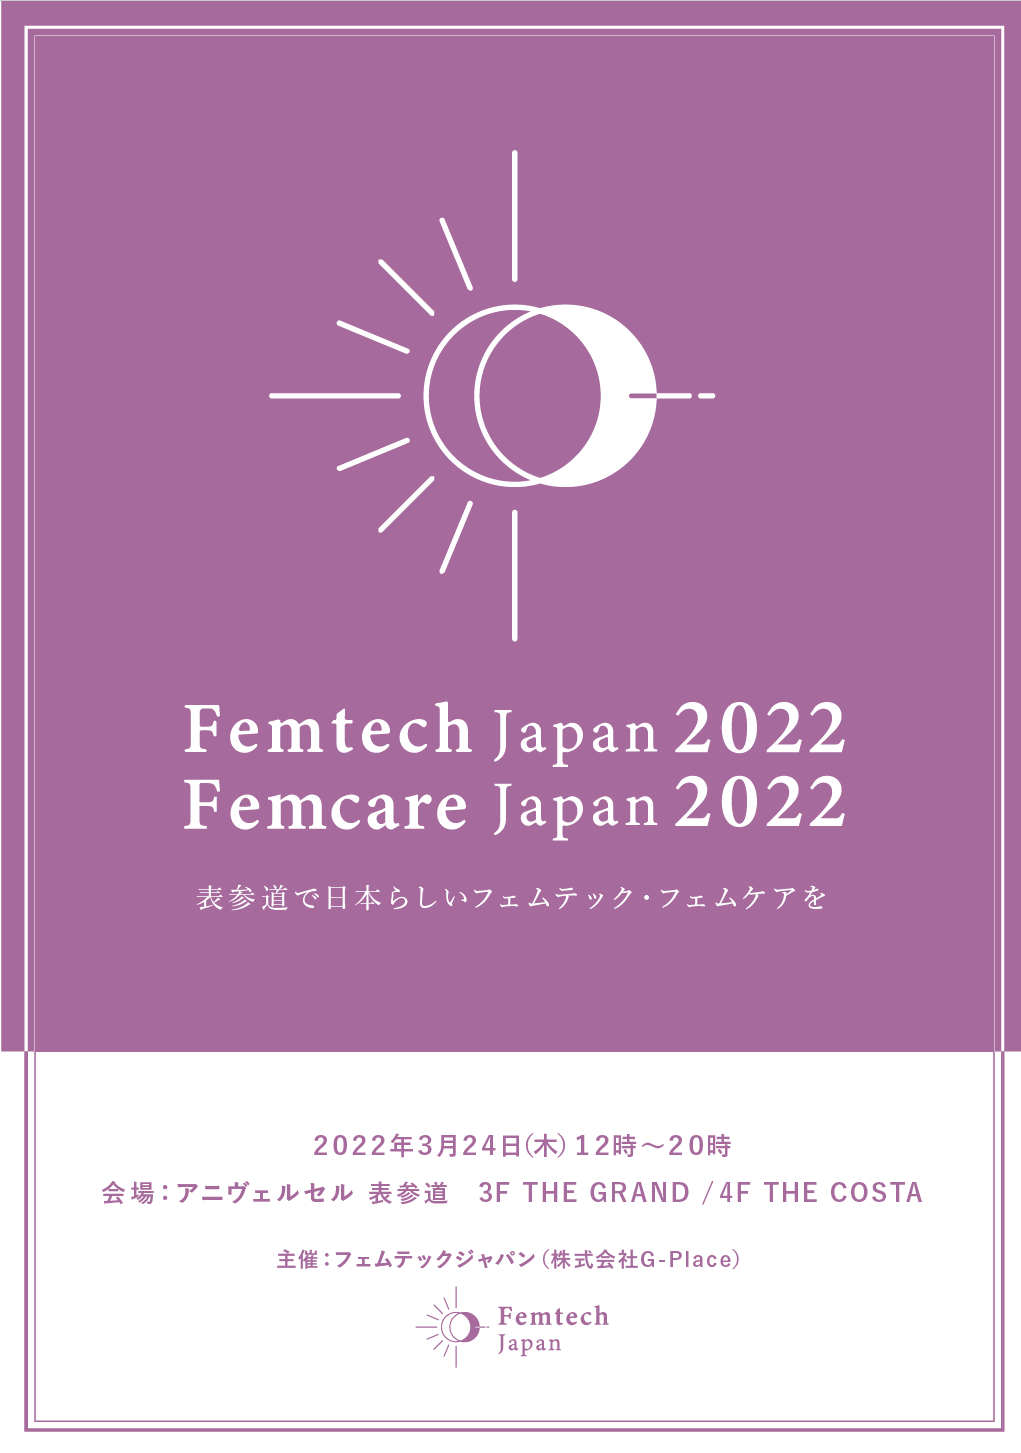 2022N324()\QŊJÁ@uFemtech Japan 2022^Femcare Japan 2022v@2/1()`\WJnEptbgLgV